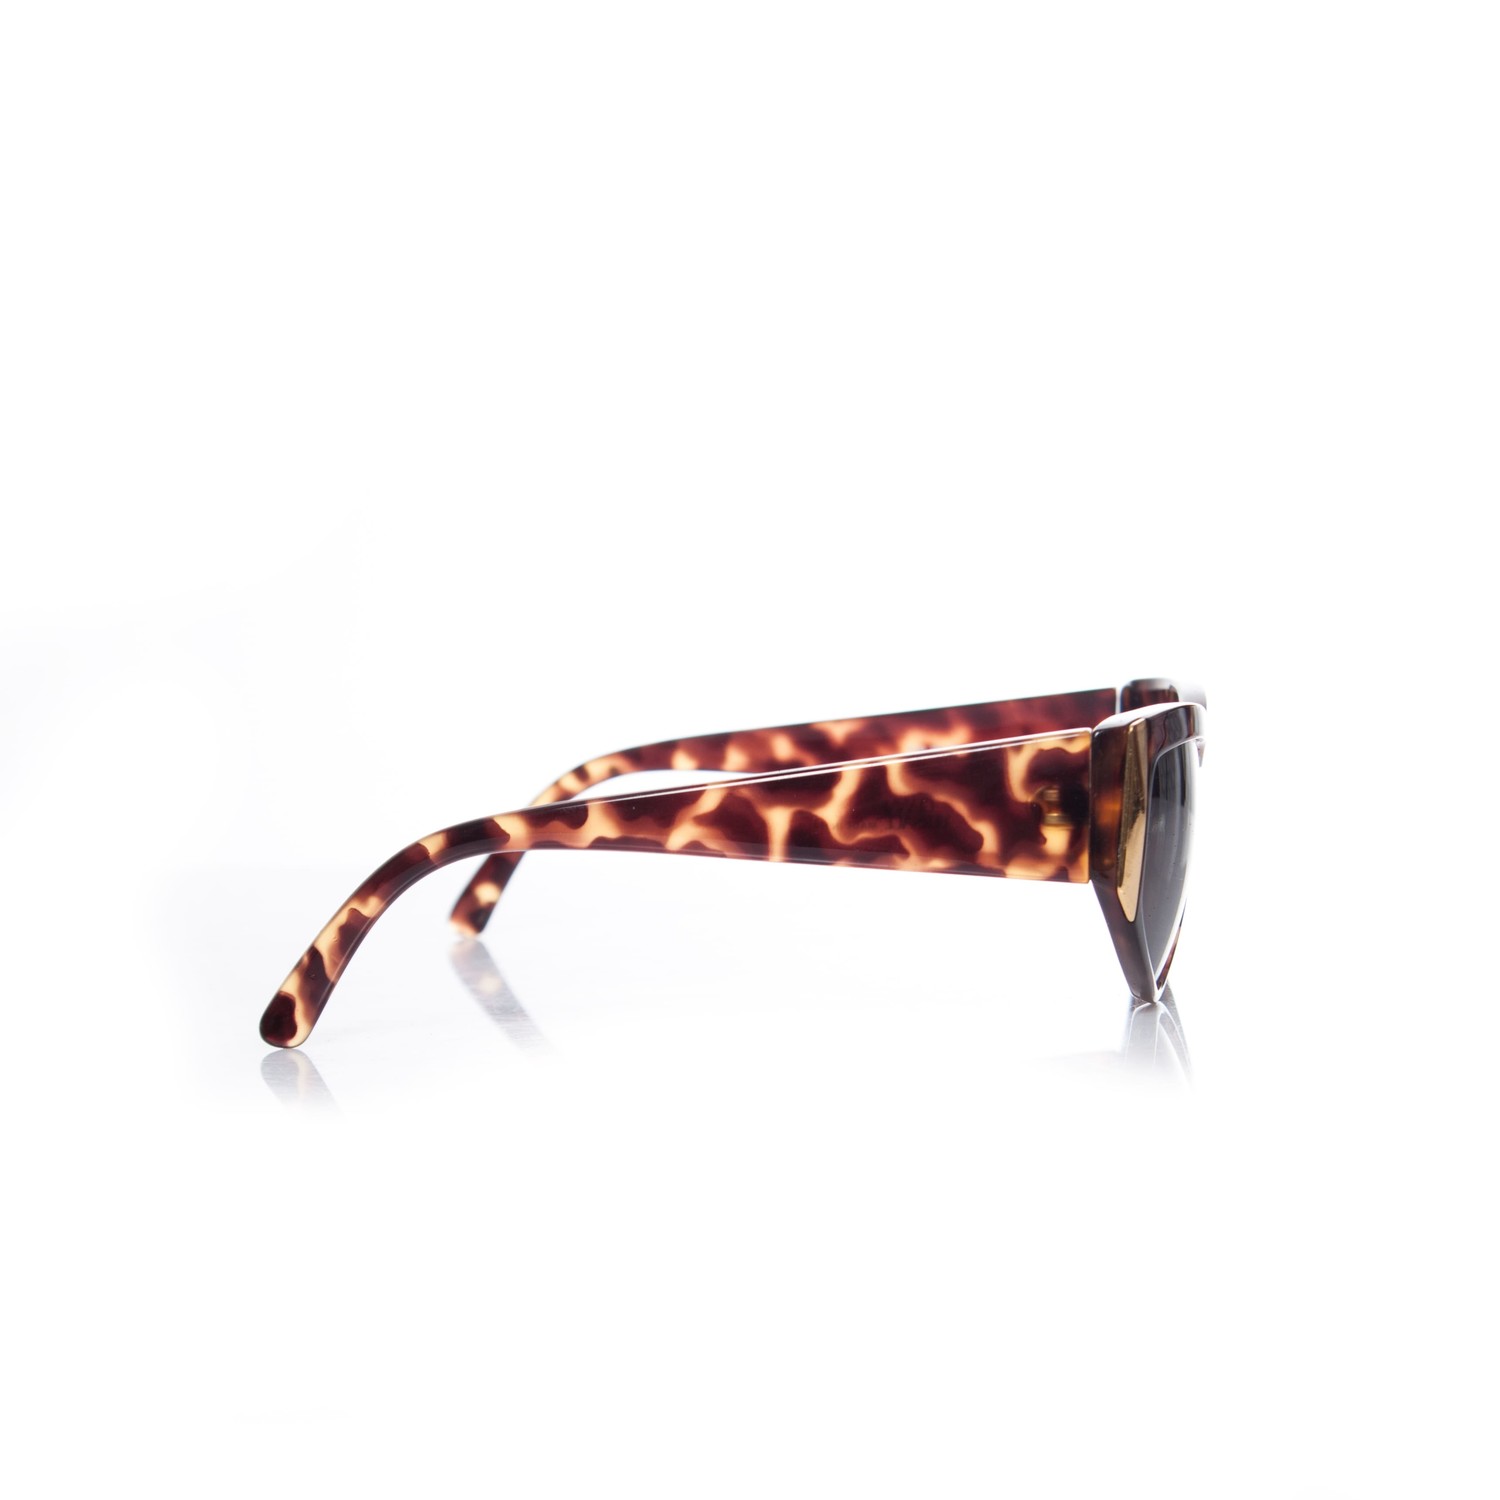 Gianni Versace, Tortoise Shell Rectangular Sunglasses. - Unique ...